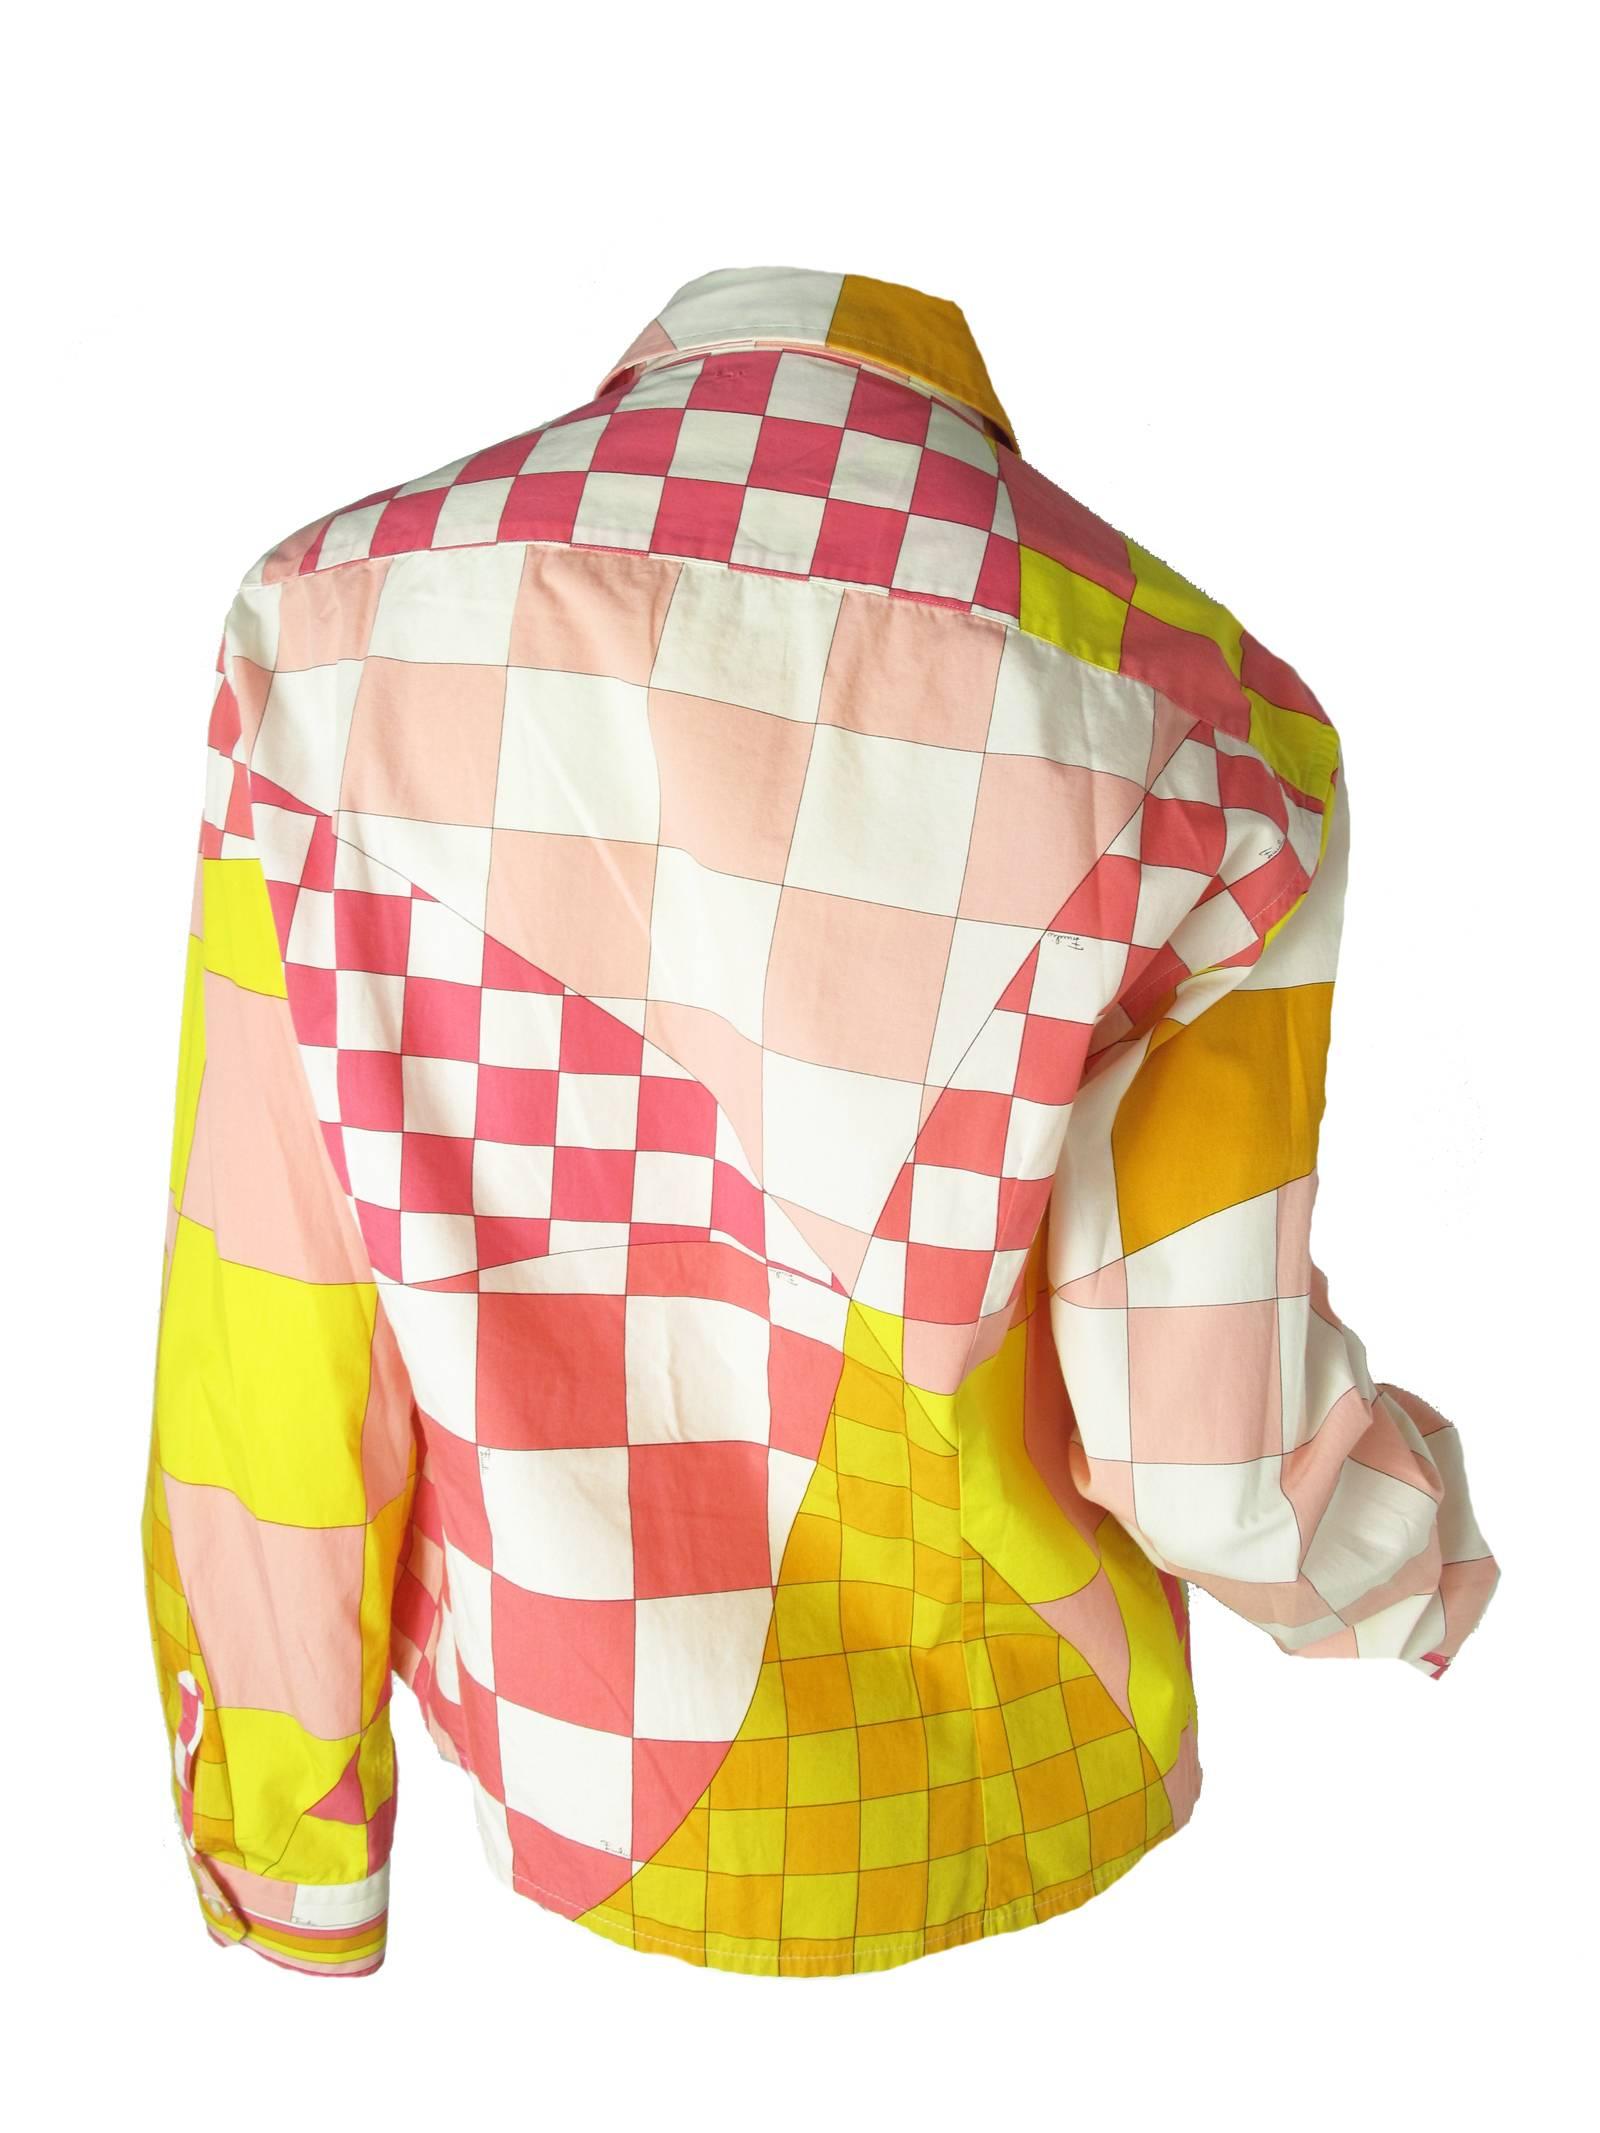 Emilio Pucci cotton printed blouse.  Condition: Vey Good.  Size Large.
42